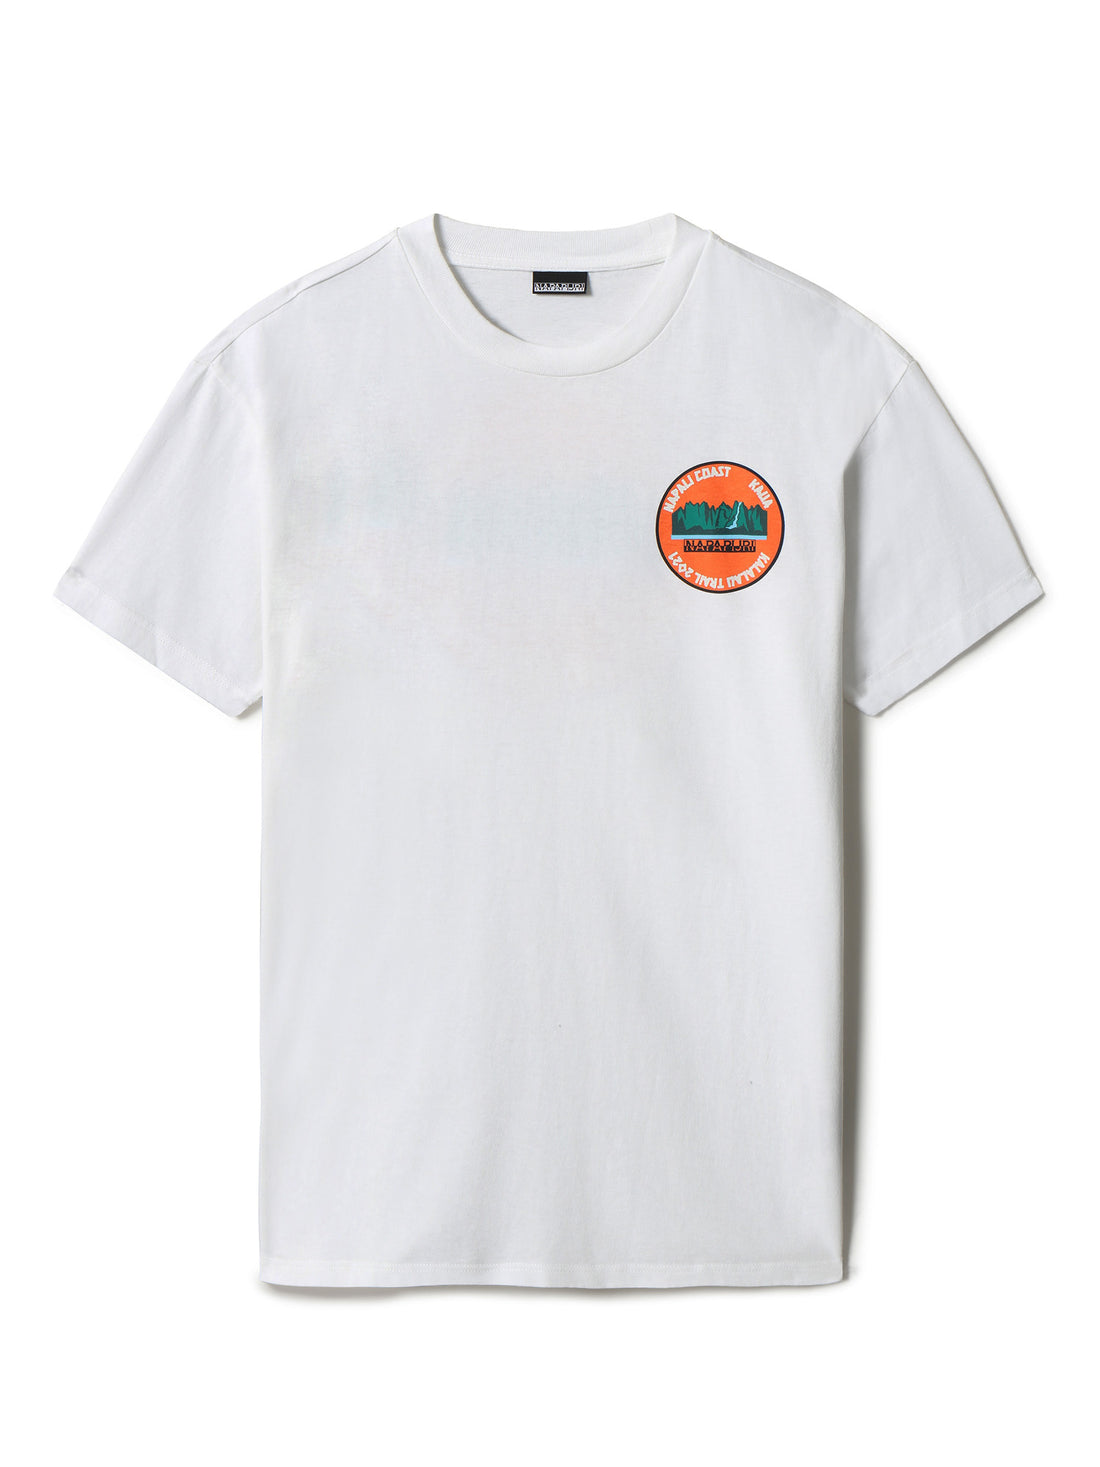 T-shirt Bianco F4m1 Napapijri